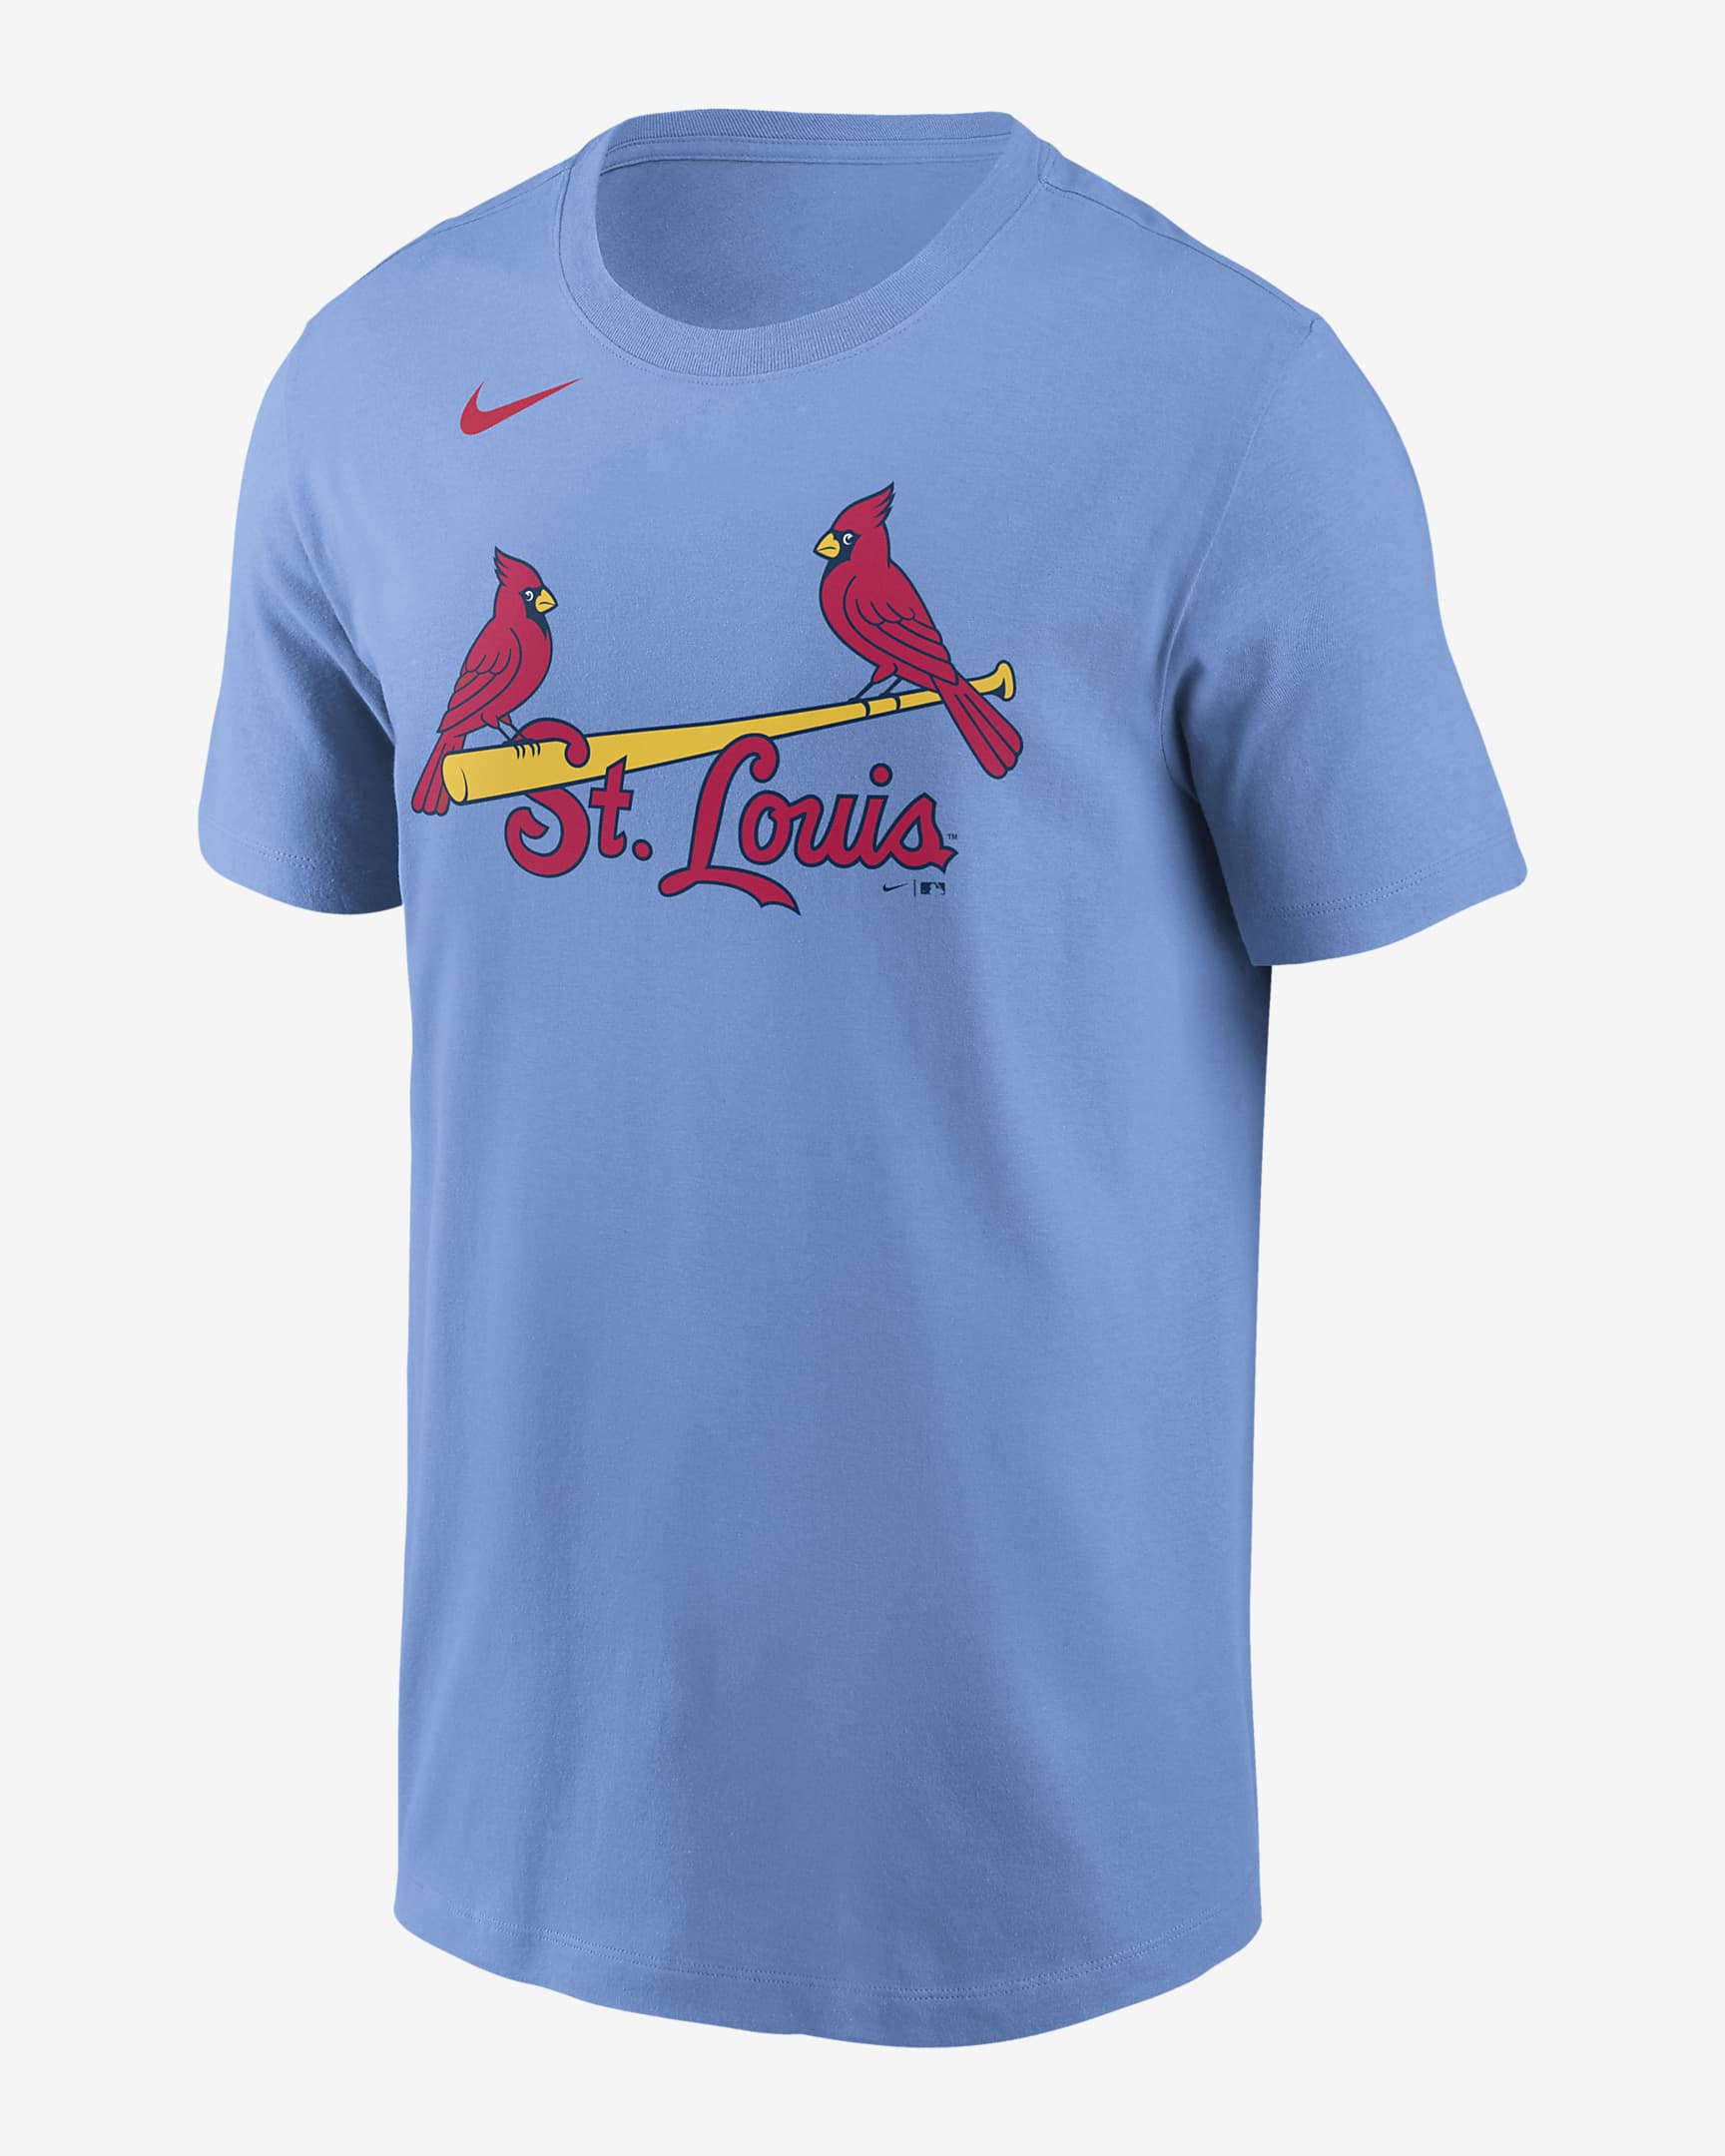 Playera para hombre MLB St. Louis Cardinals (Nolan Arenado). Nike.com